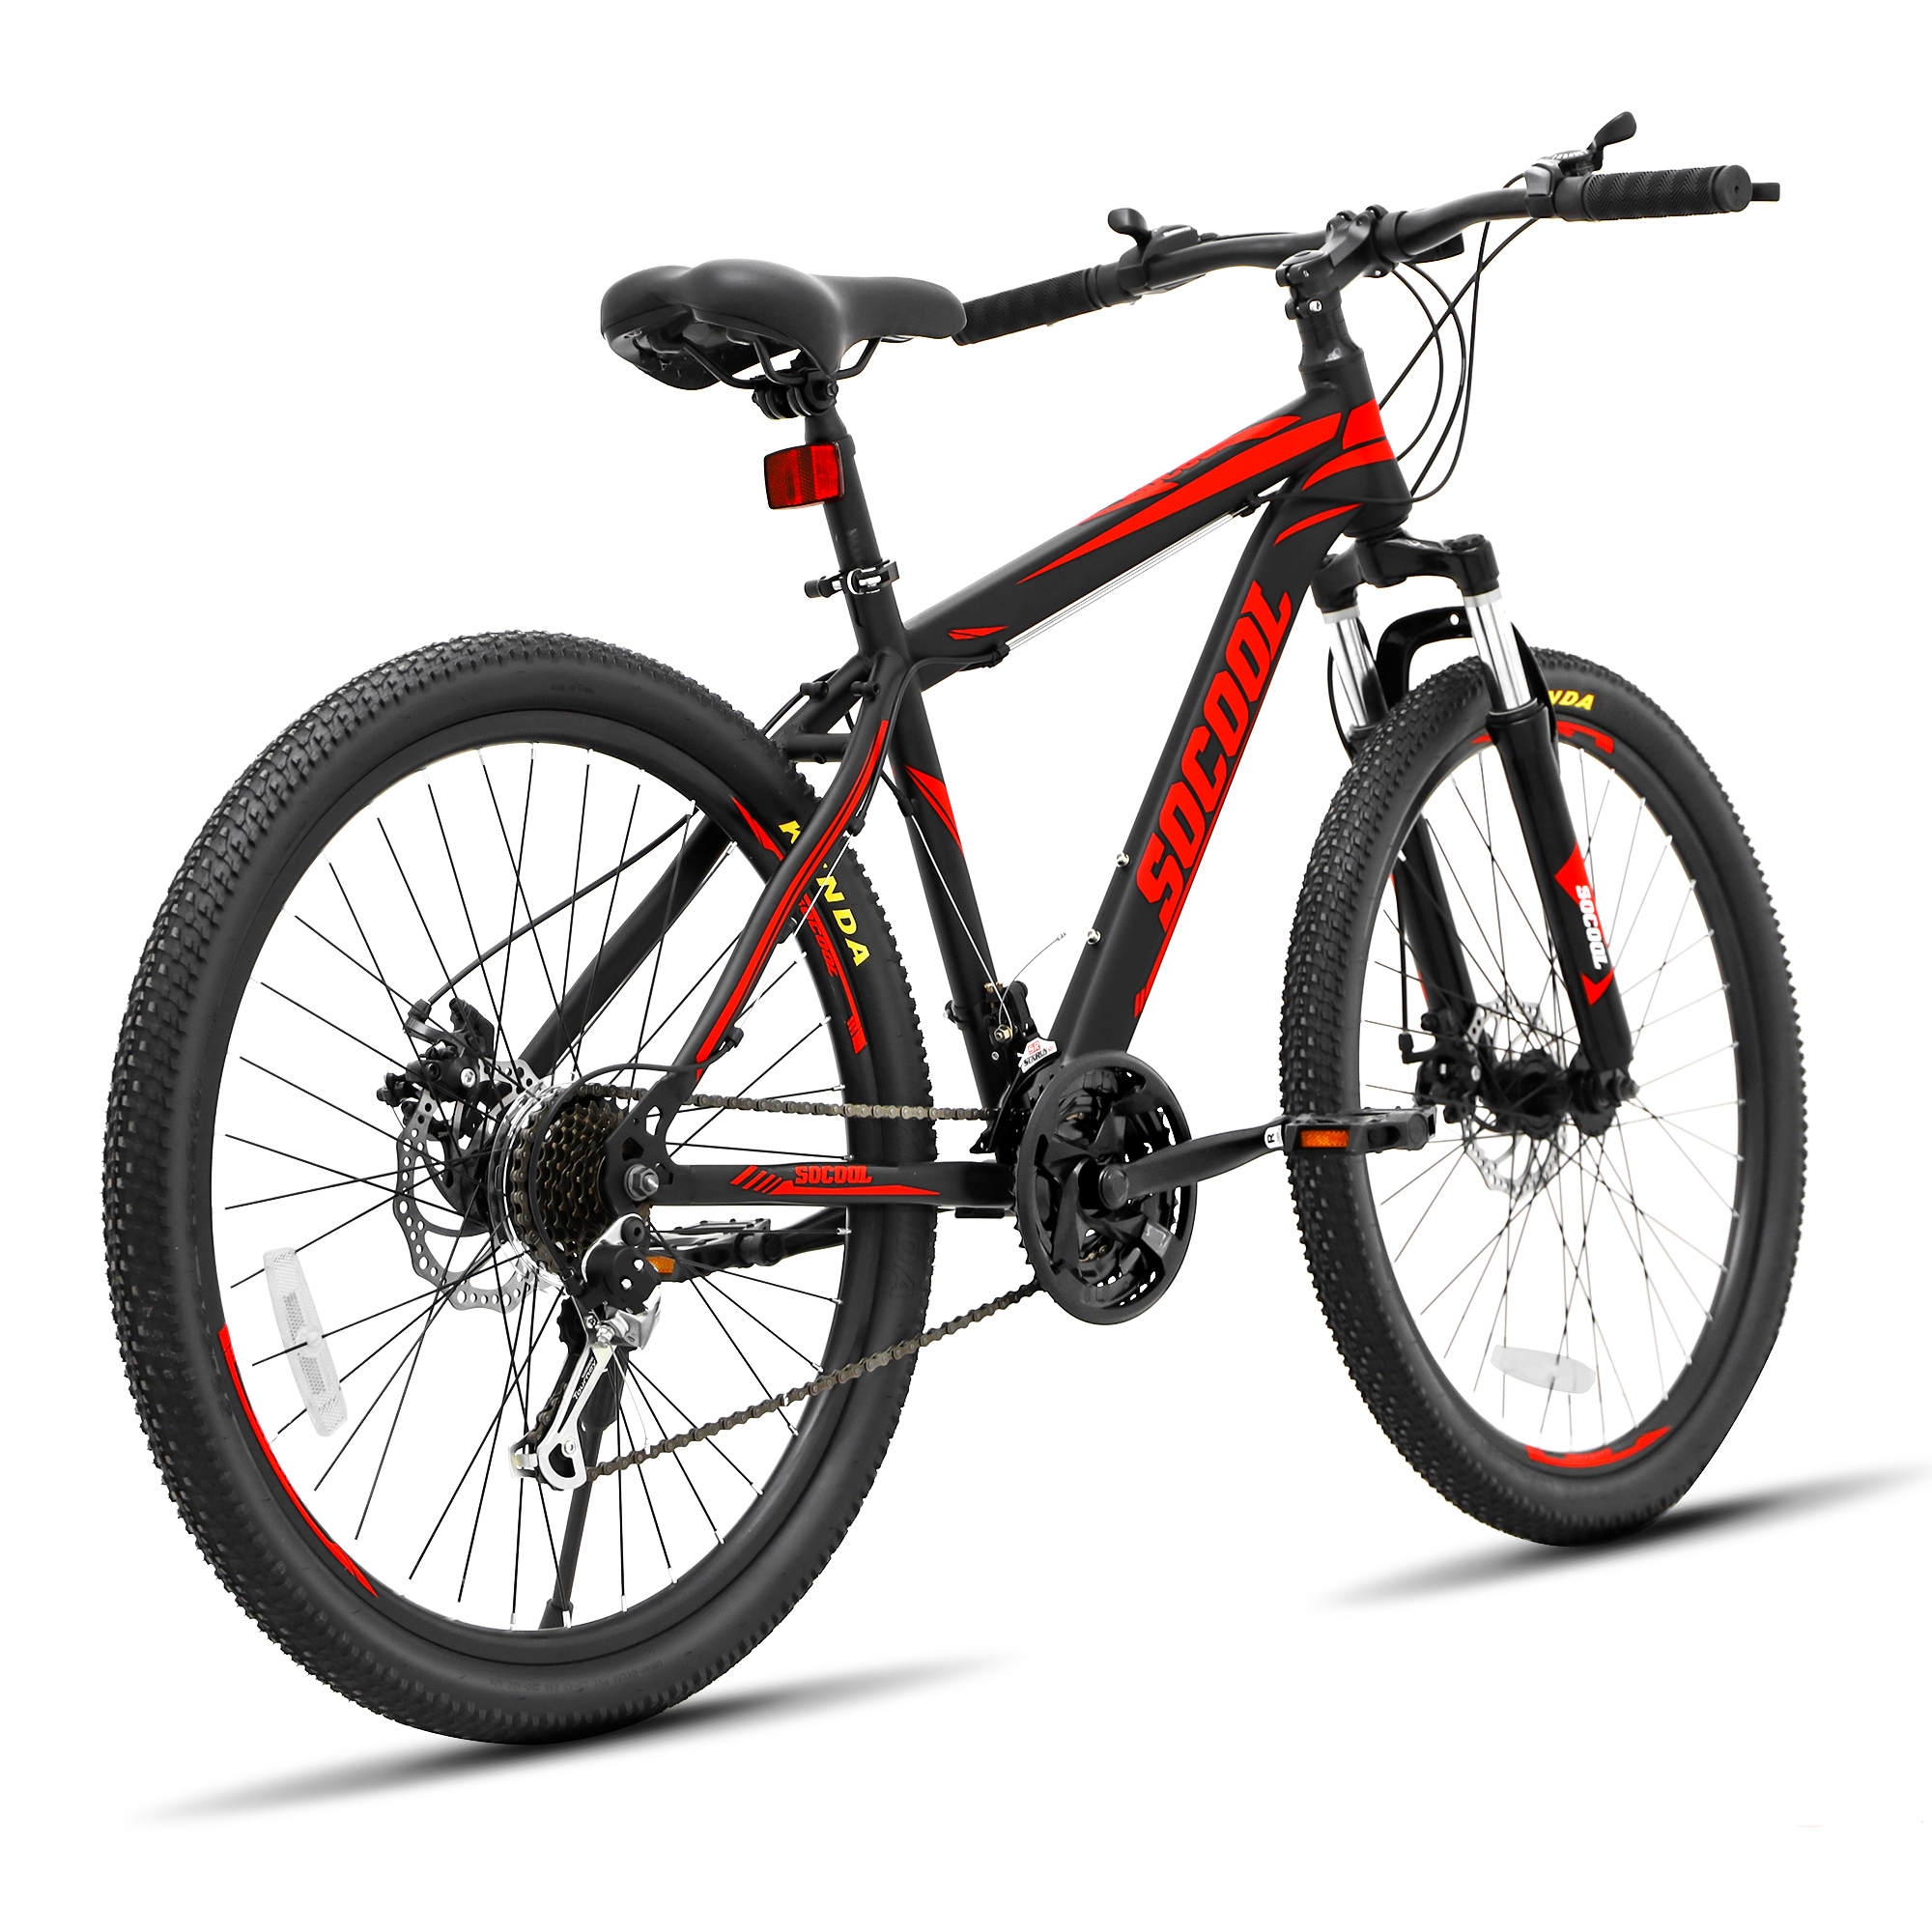 SOCOOL 26" Road Bike, Shimano 21 Speeds, Light Weight Aluminum Frame, Mountain Bike for Men -Black & Red, ZA922BK - image 1 of 9